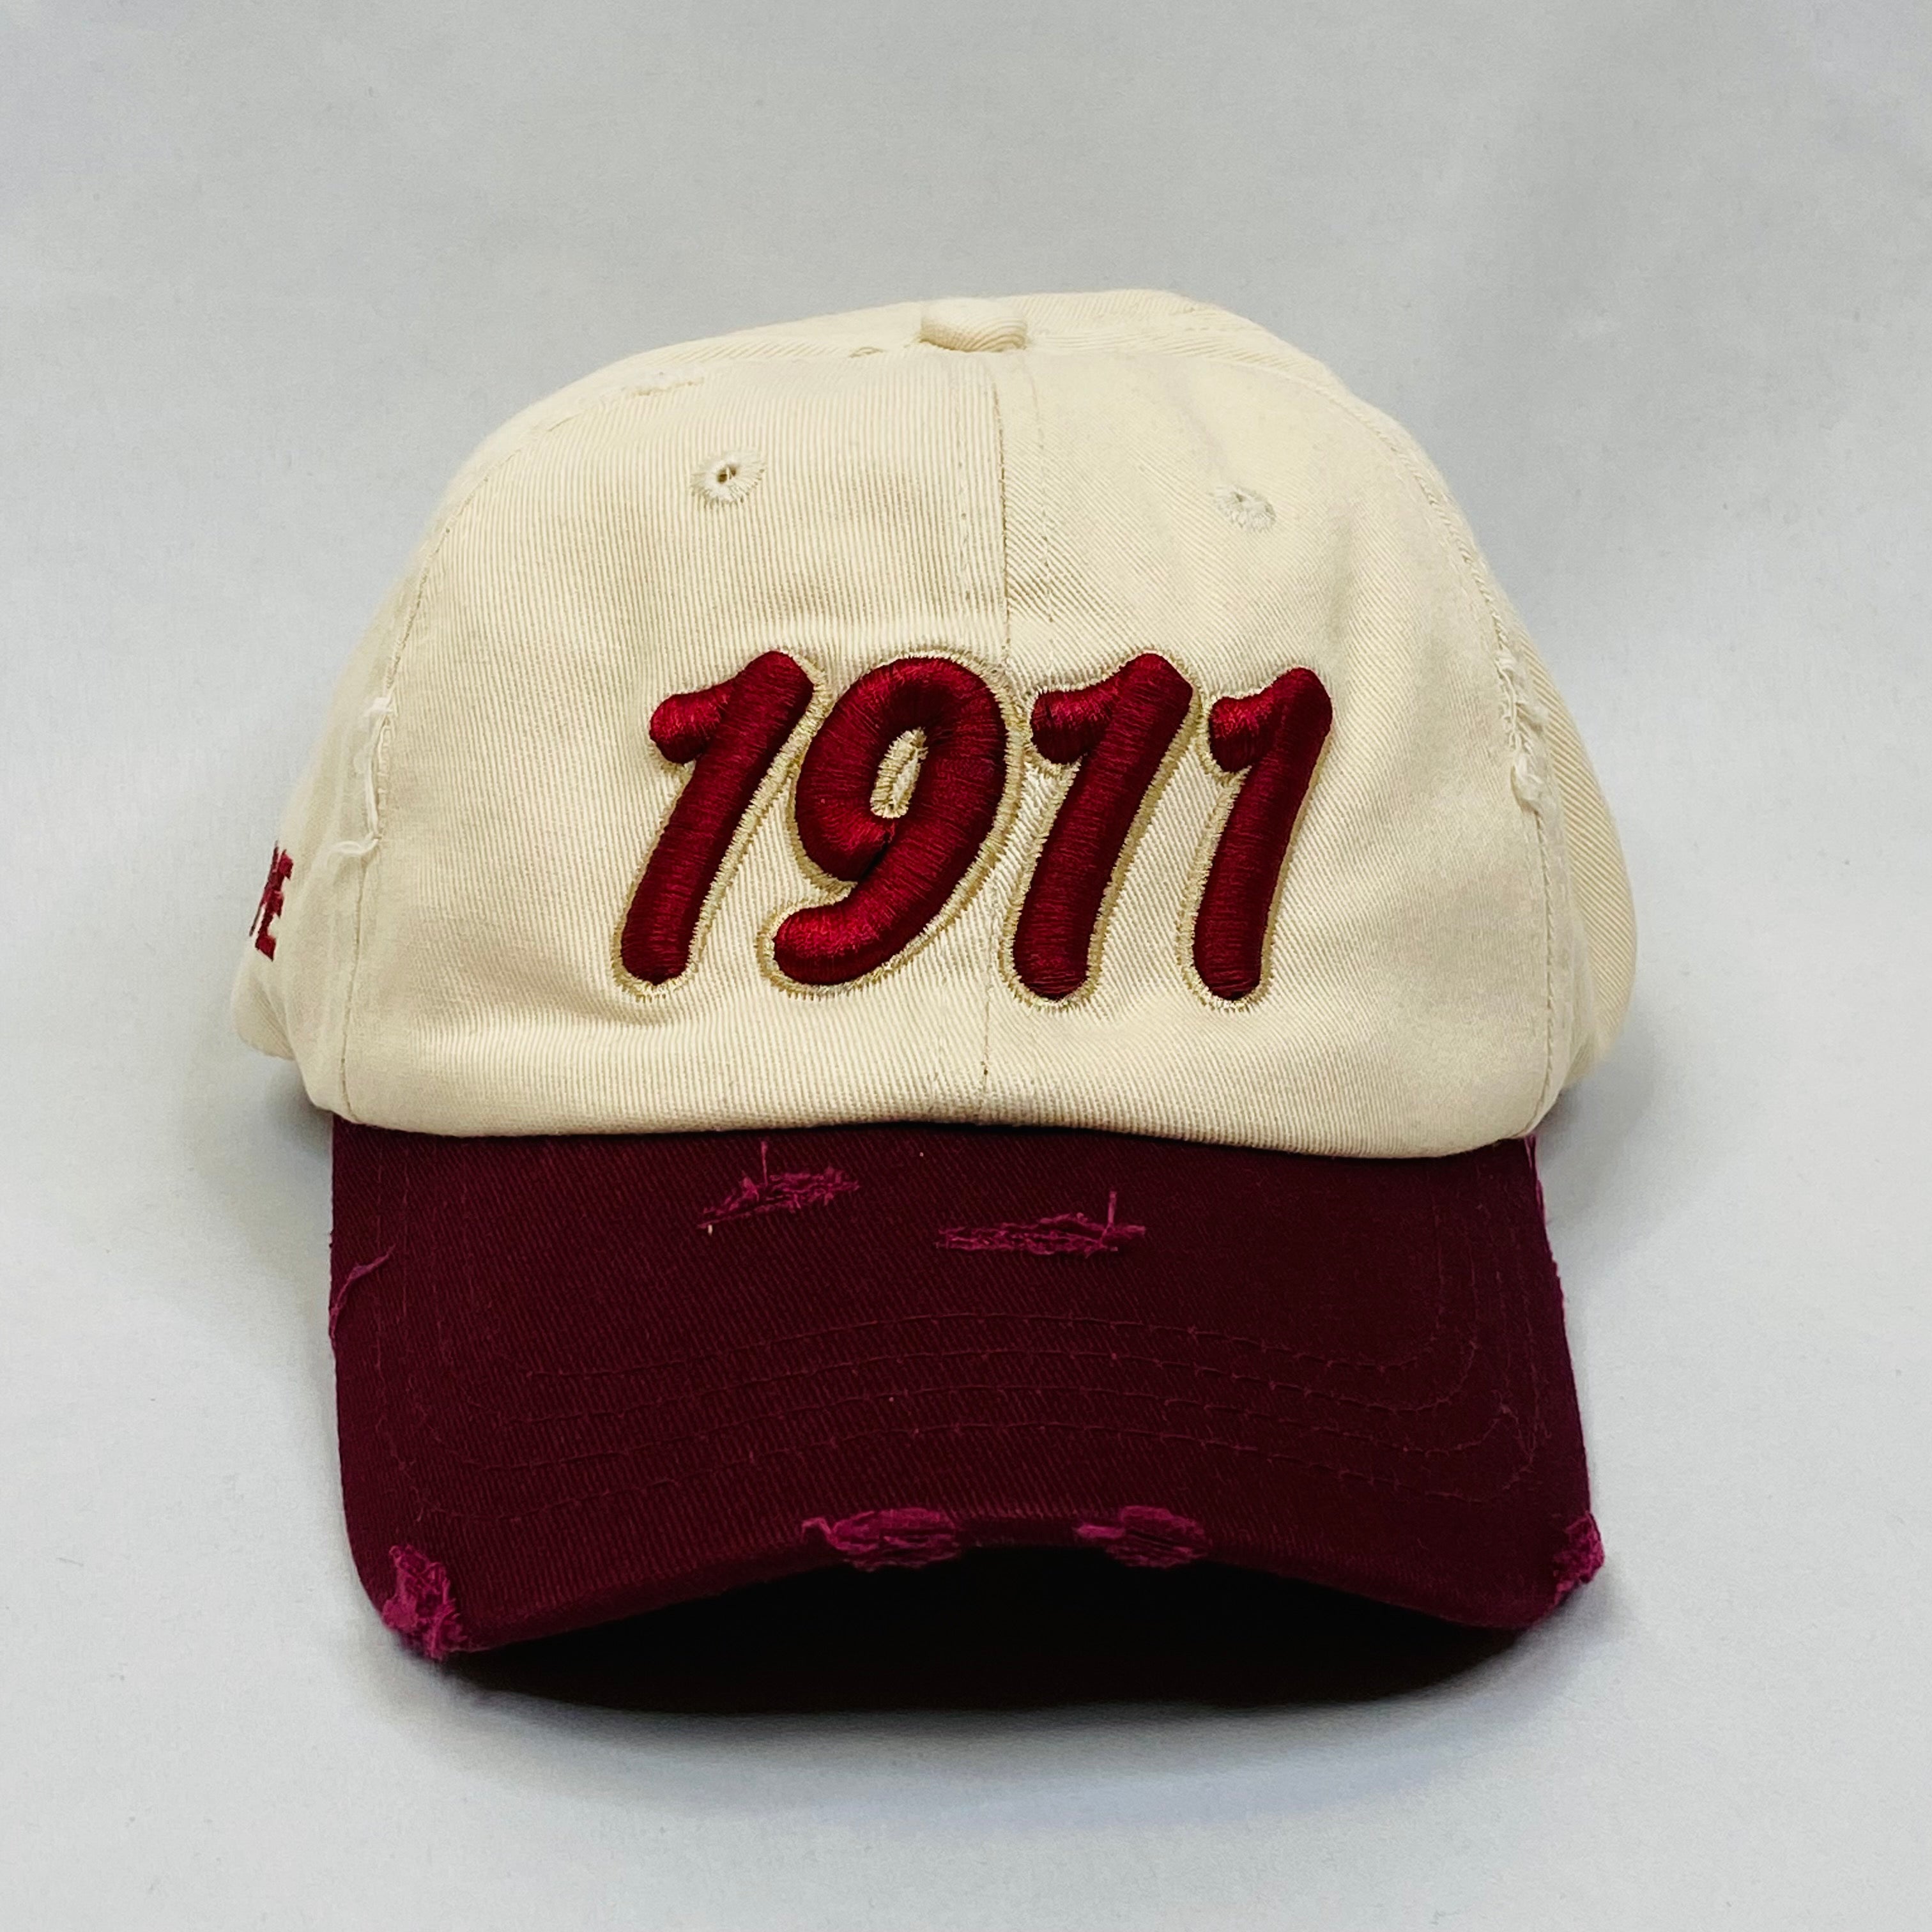 “1911” Kappa Alpha Psi Kream & Krimson distressed hat